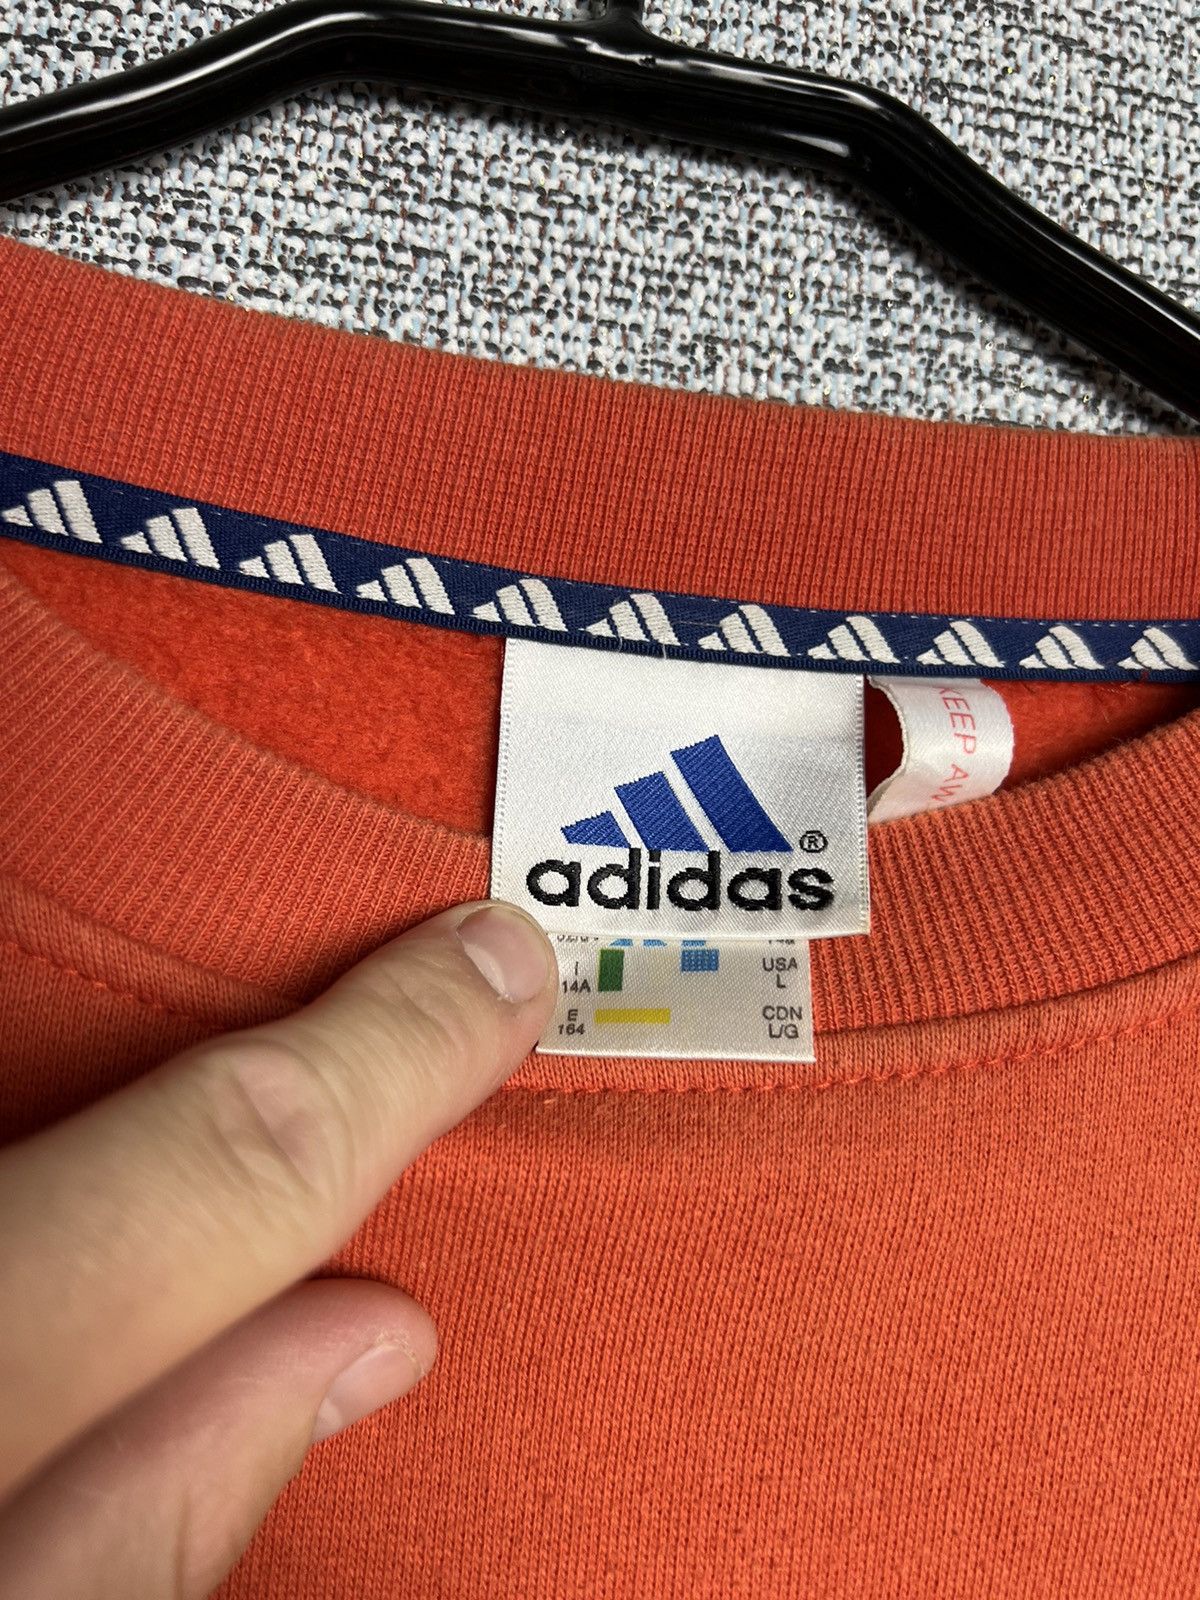 Adidas Adidas vintage sweatshirt 🔥 Size US S / EU 44-46 / 1 - 4 Thumbnail